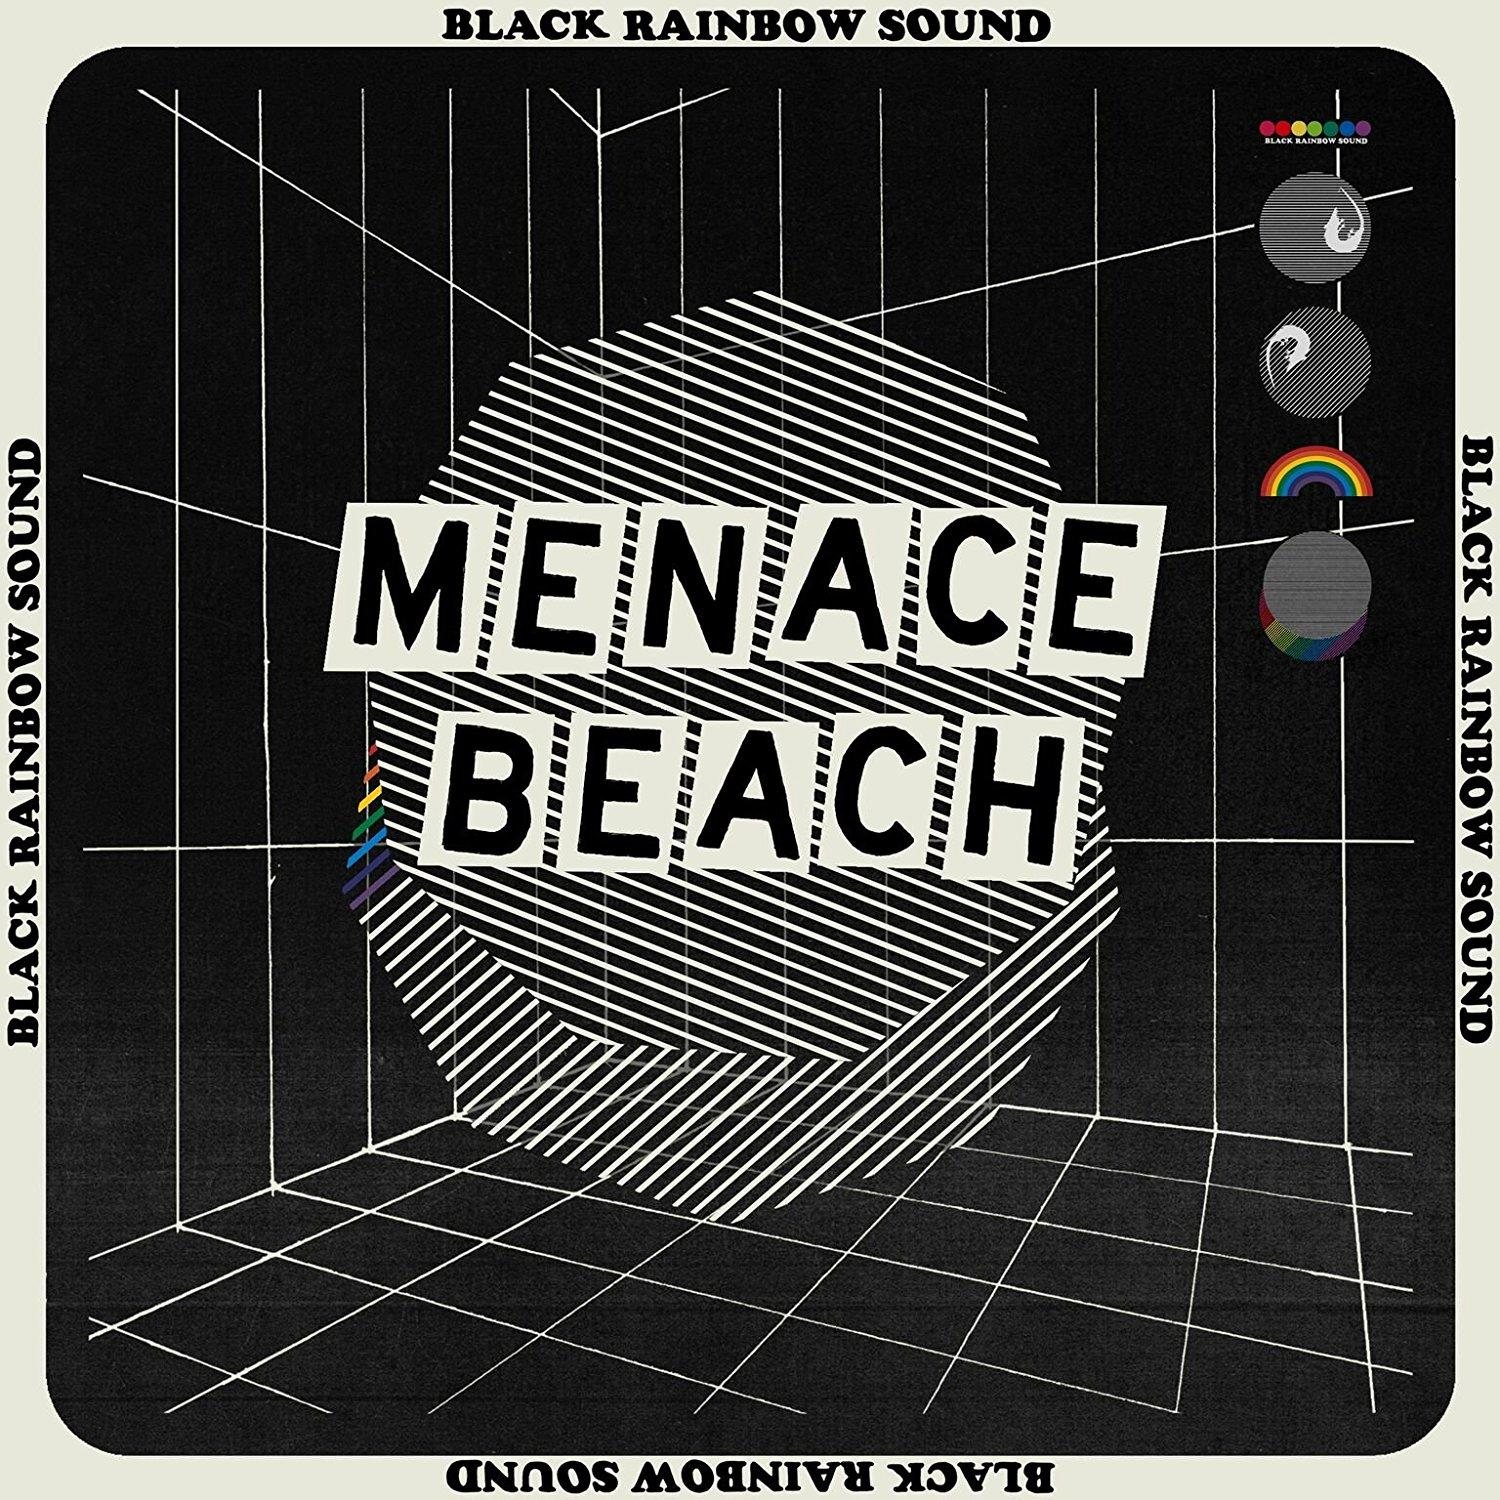 Sound - Rainbow (CD) Beach Black - Menace